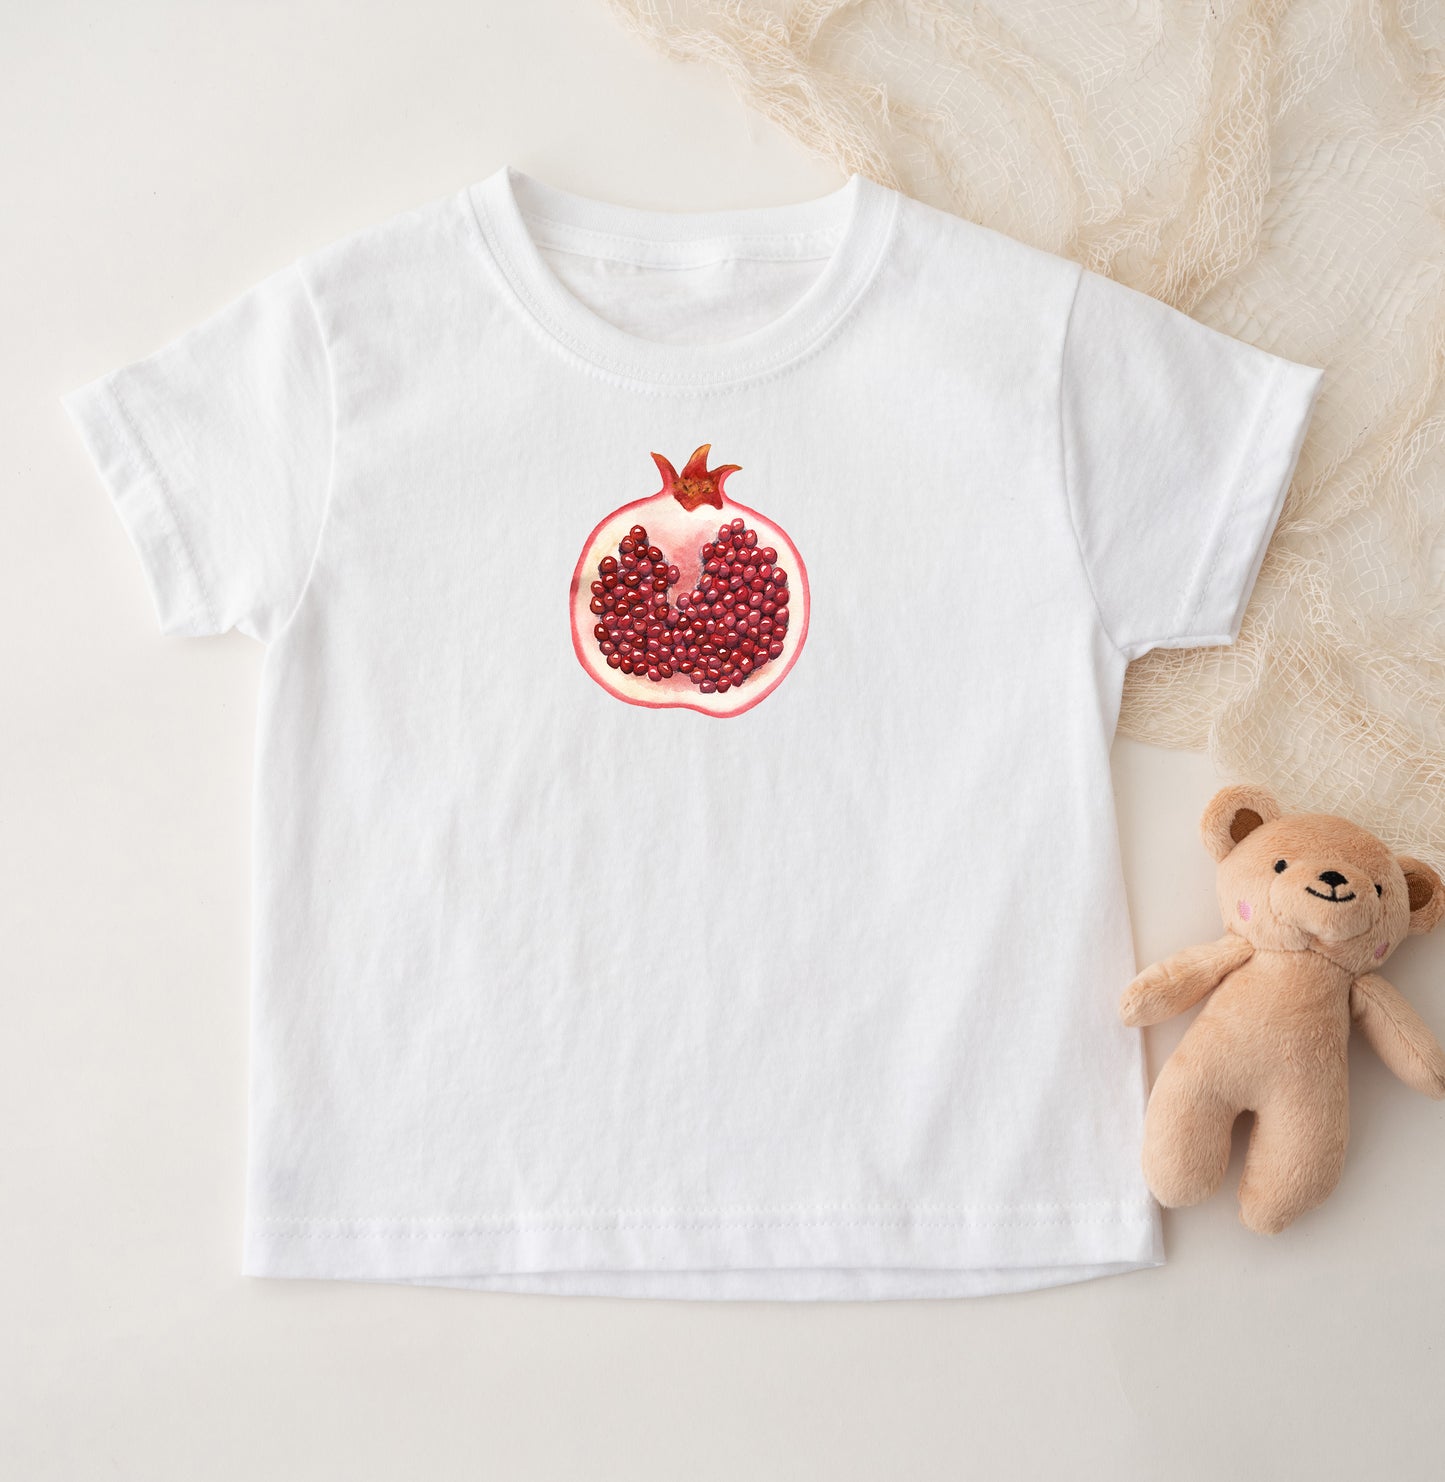 Pomegranate Fruit Print Graphic Tshirt for Toddler Kids